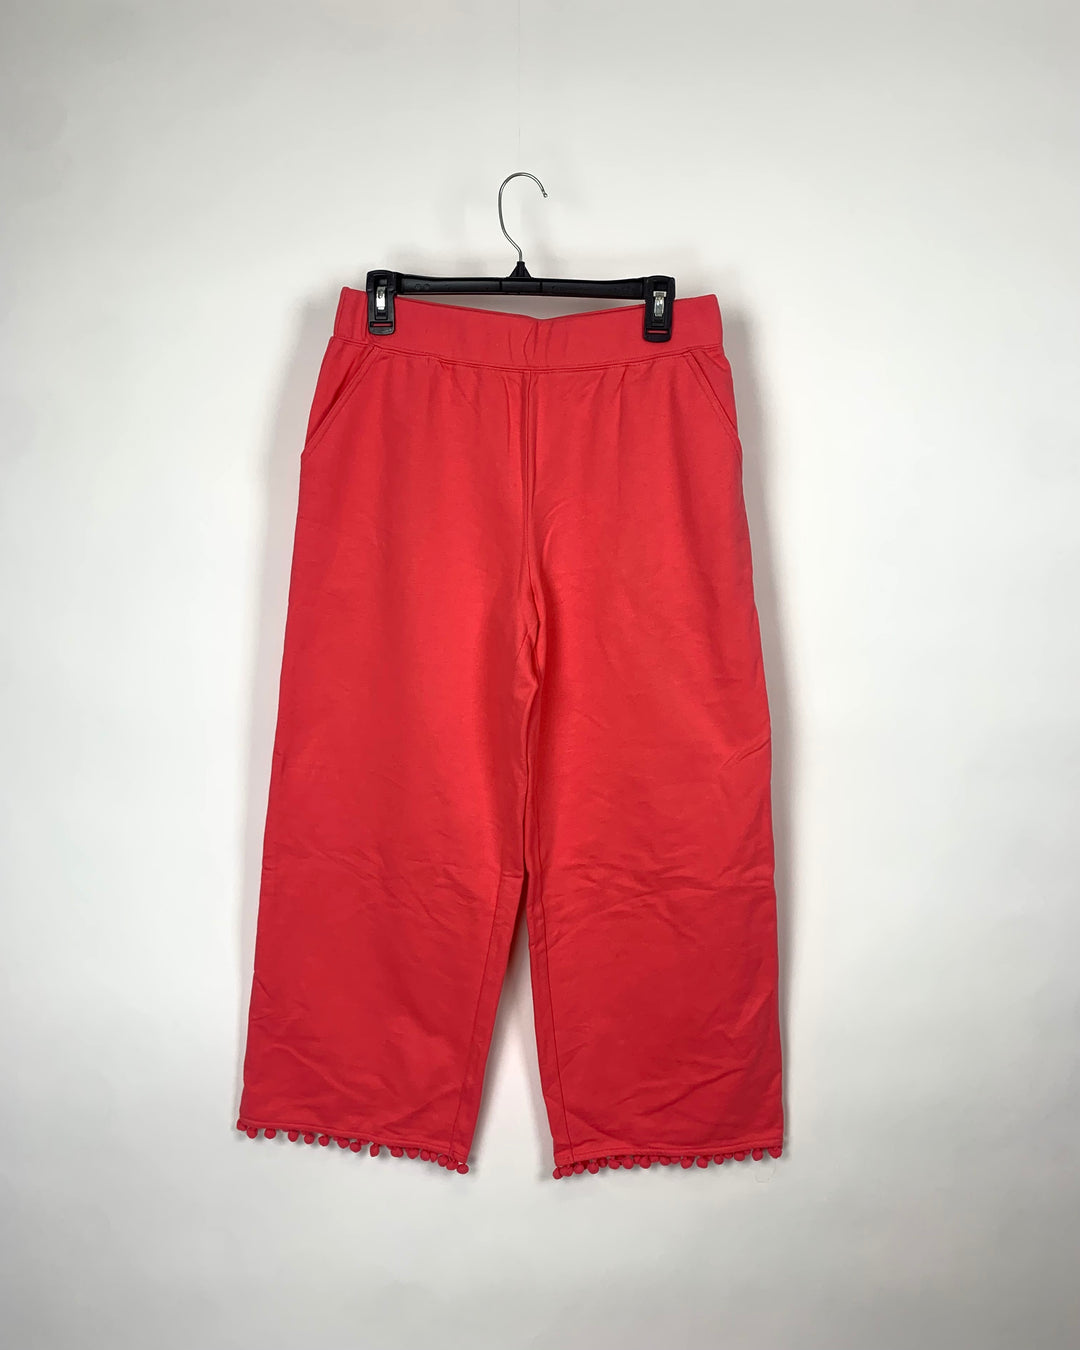 Pink Tassel Hemmed Pants - Small/Medium and Large/Extra Large